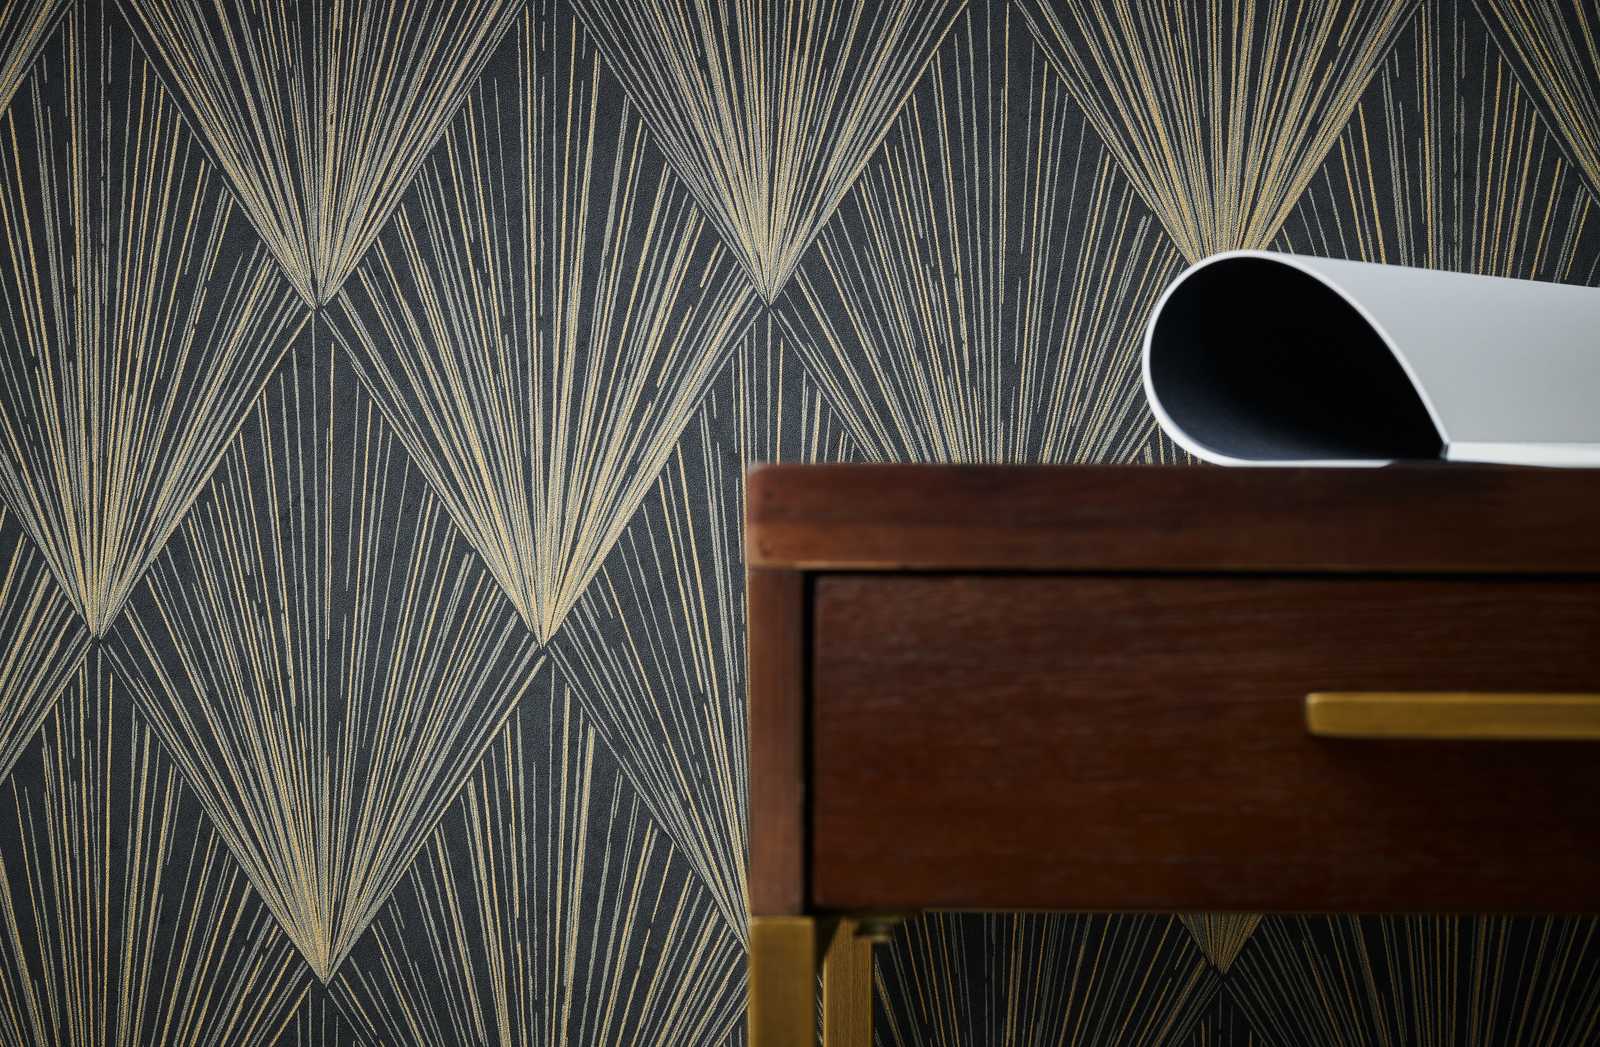             Black non-woven wallpaper with metallic pattern - beige, metallic, black
        